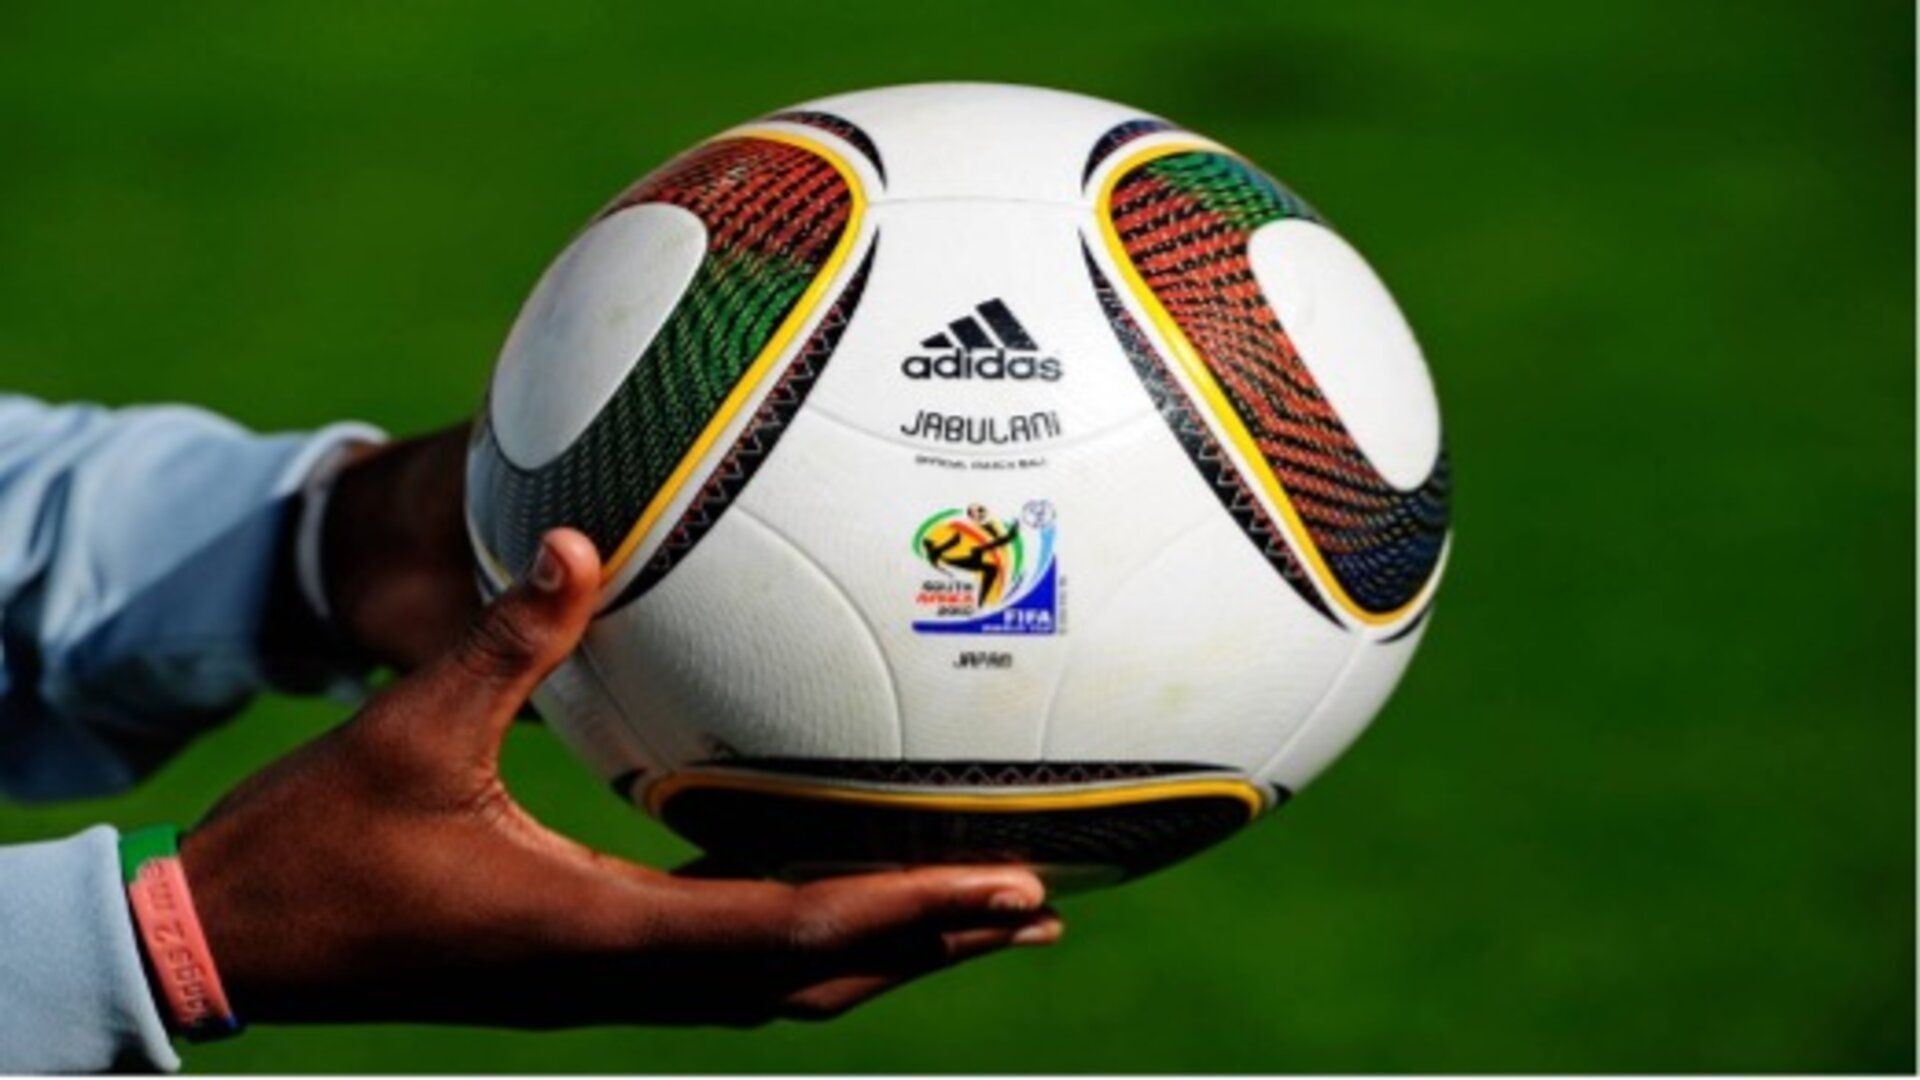 The official 2010 World Cup ball, The Adidas Jabulani. 